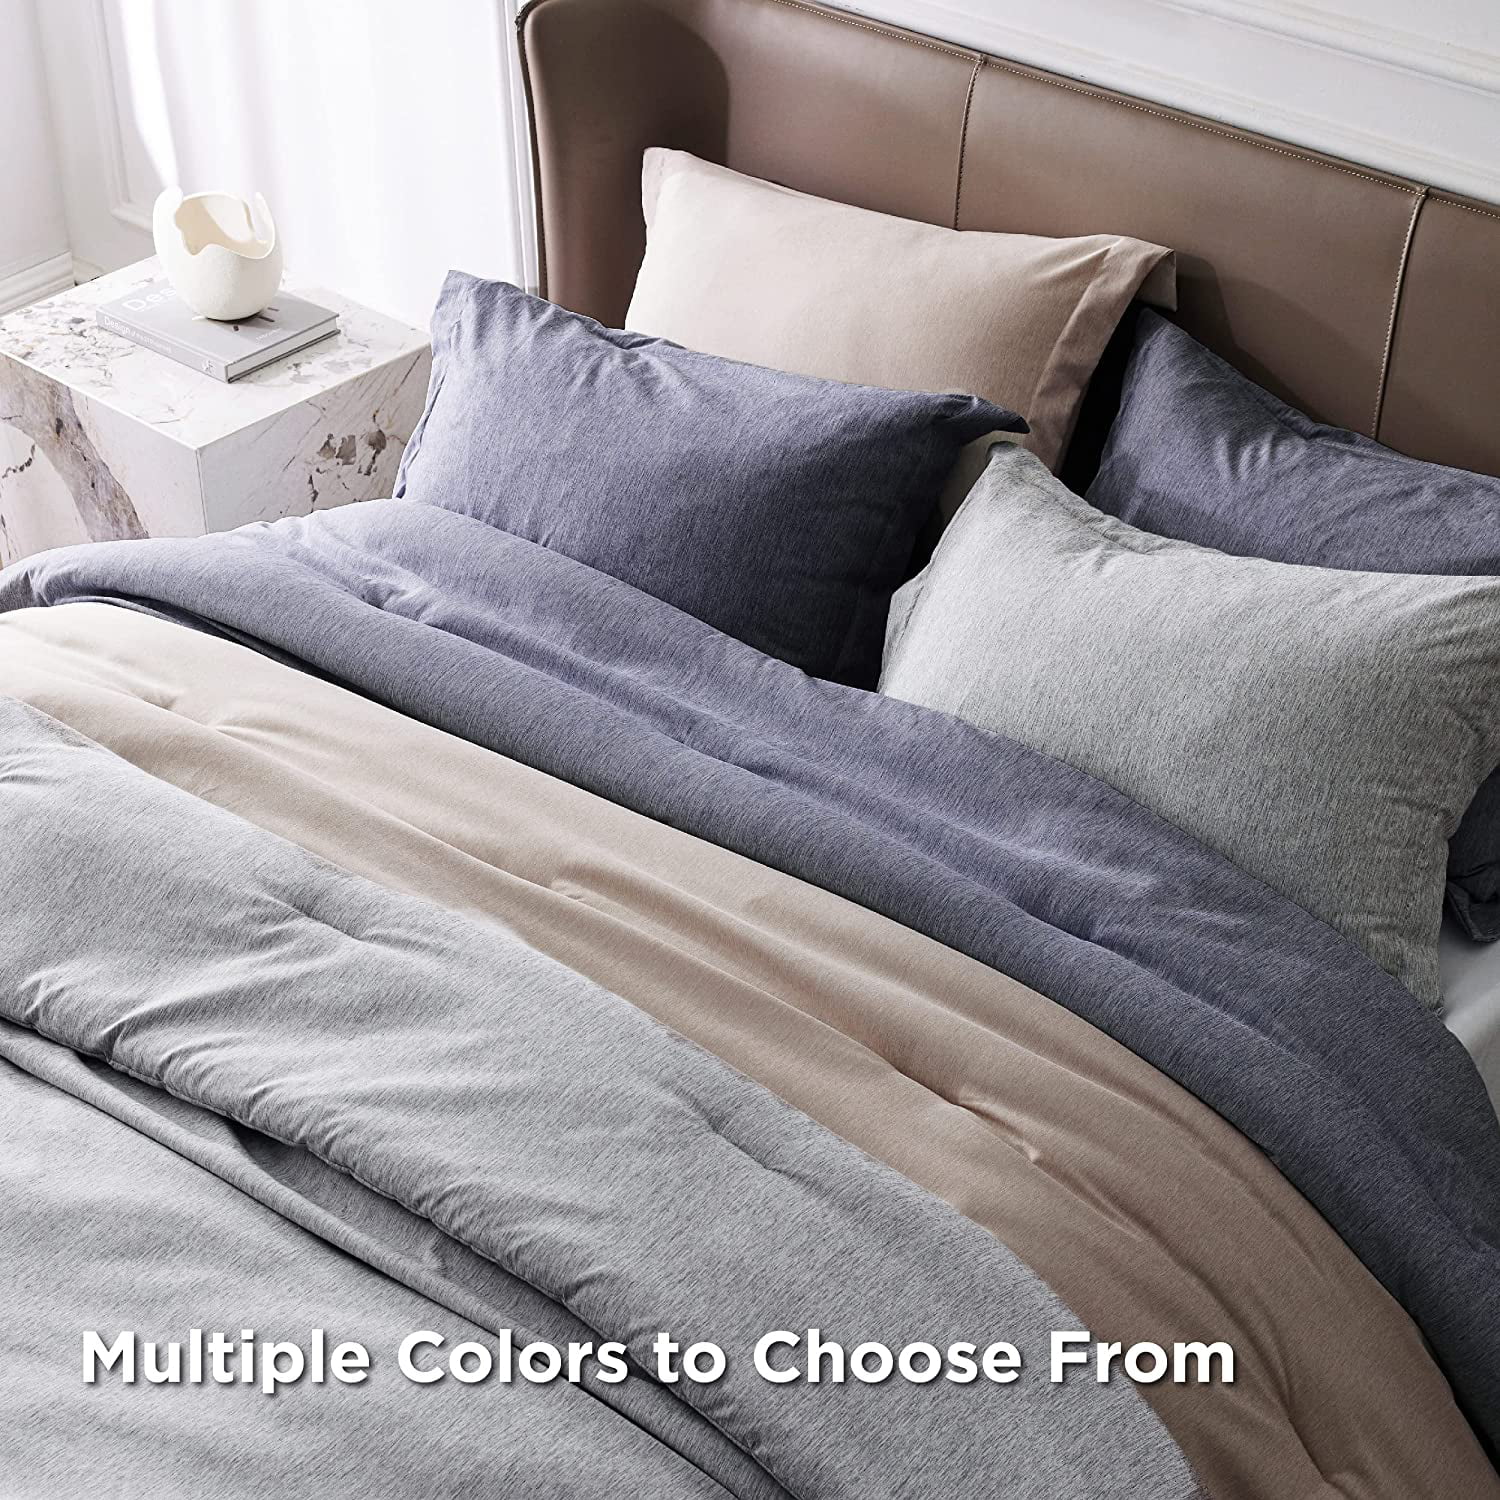  DCP Bedding King Comforter Set (90x103) - 3 Pieces